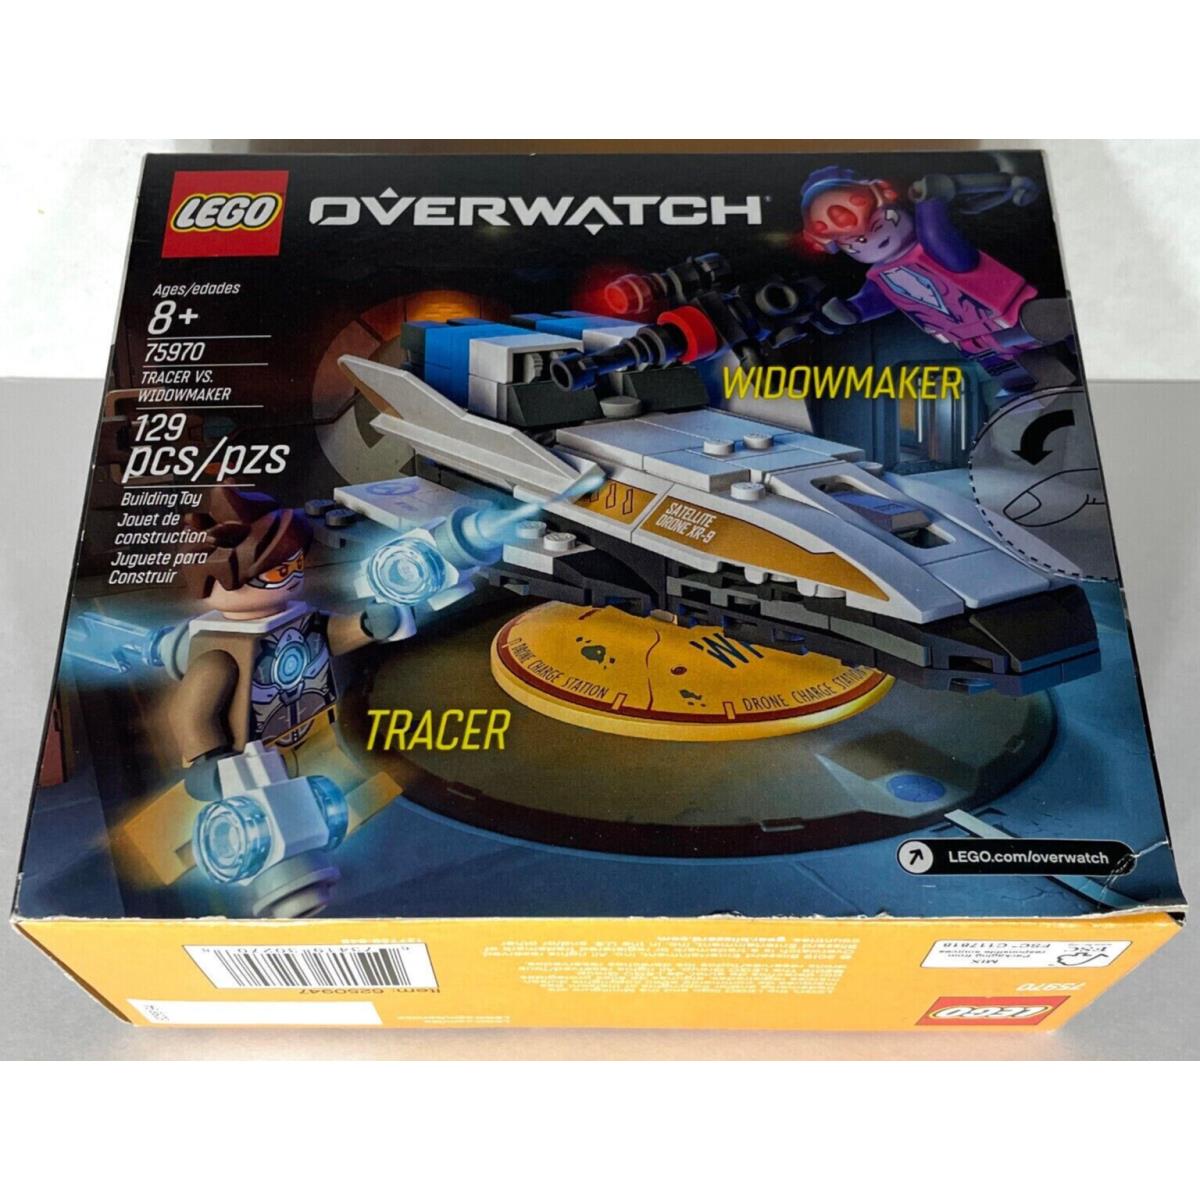 Lego Overwatch Tracer Vs. Widowmaker 75970 Building Kit 129 Pcs Retired Set